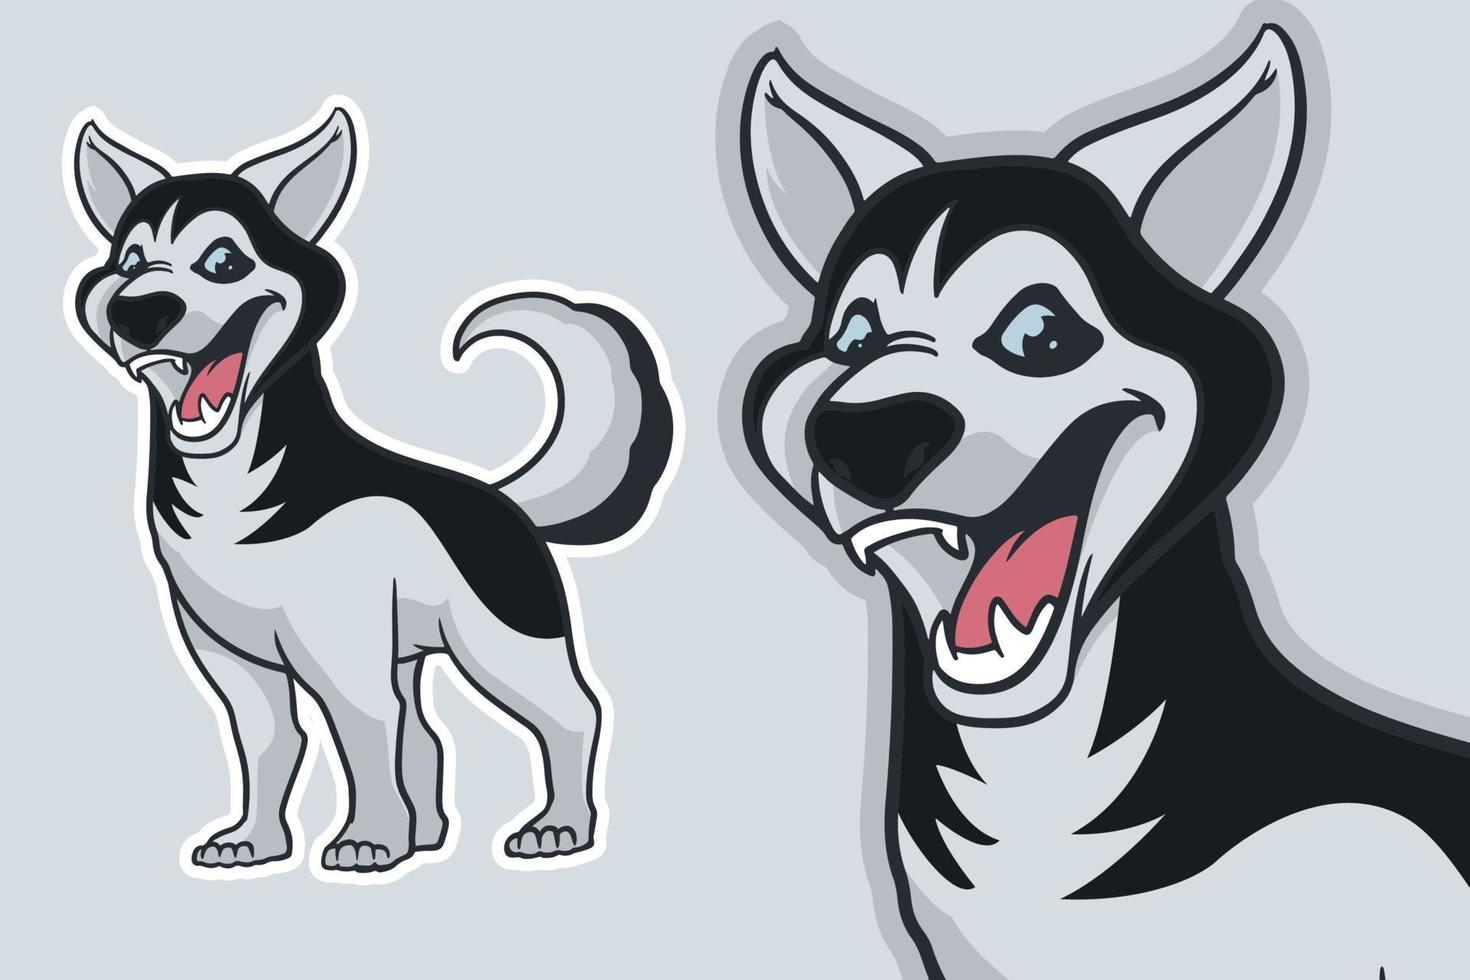 husky dog vector illustration cartoon style